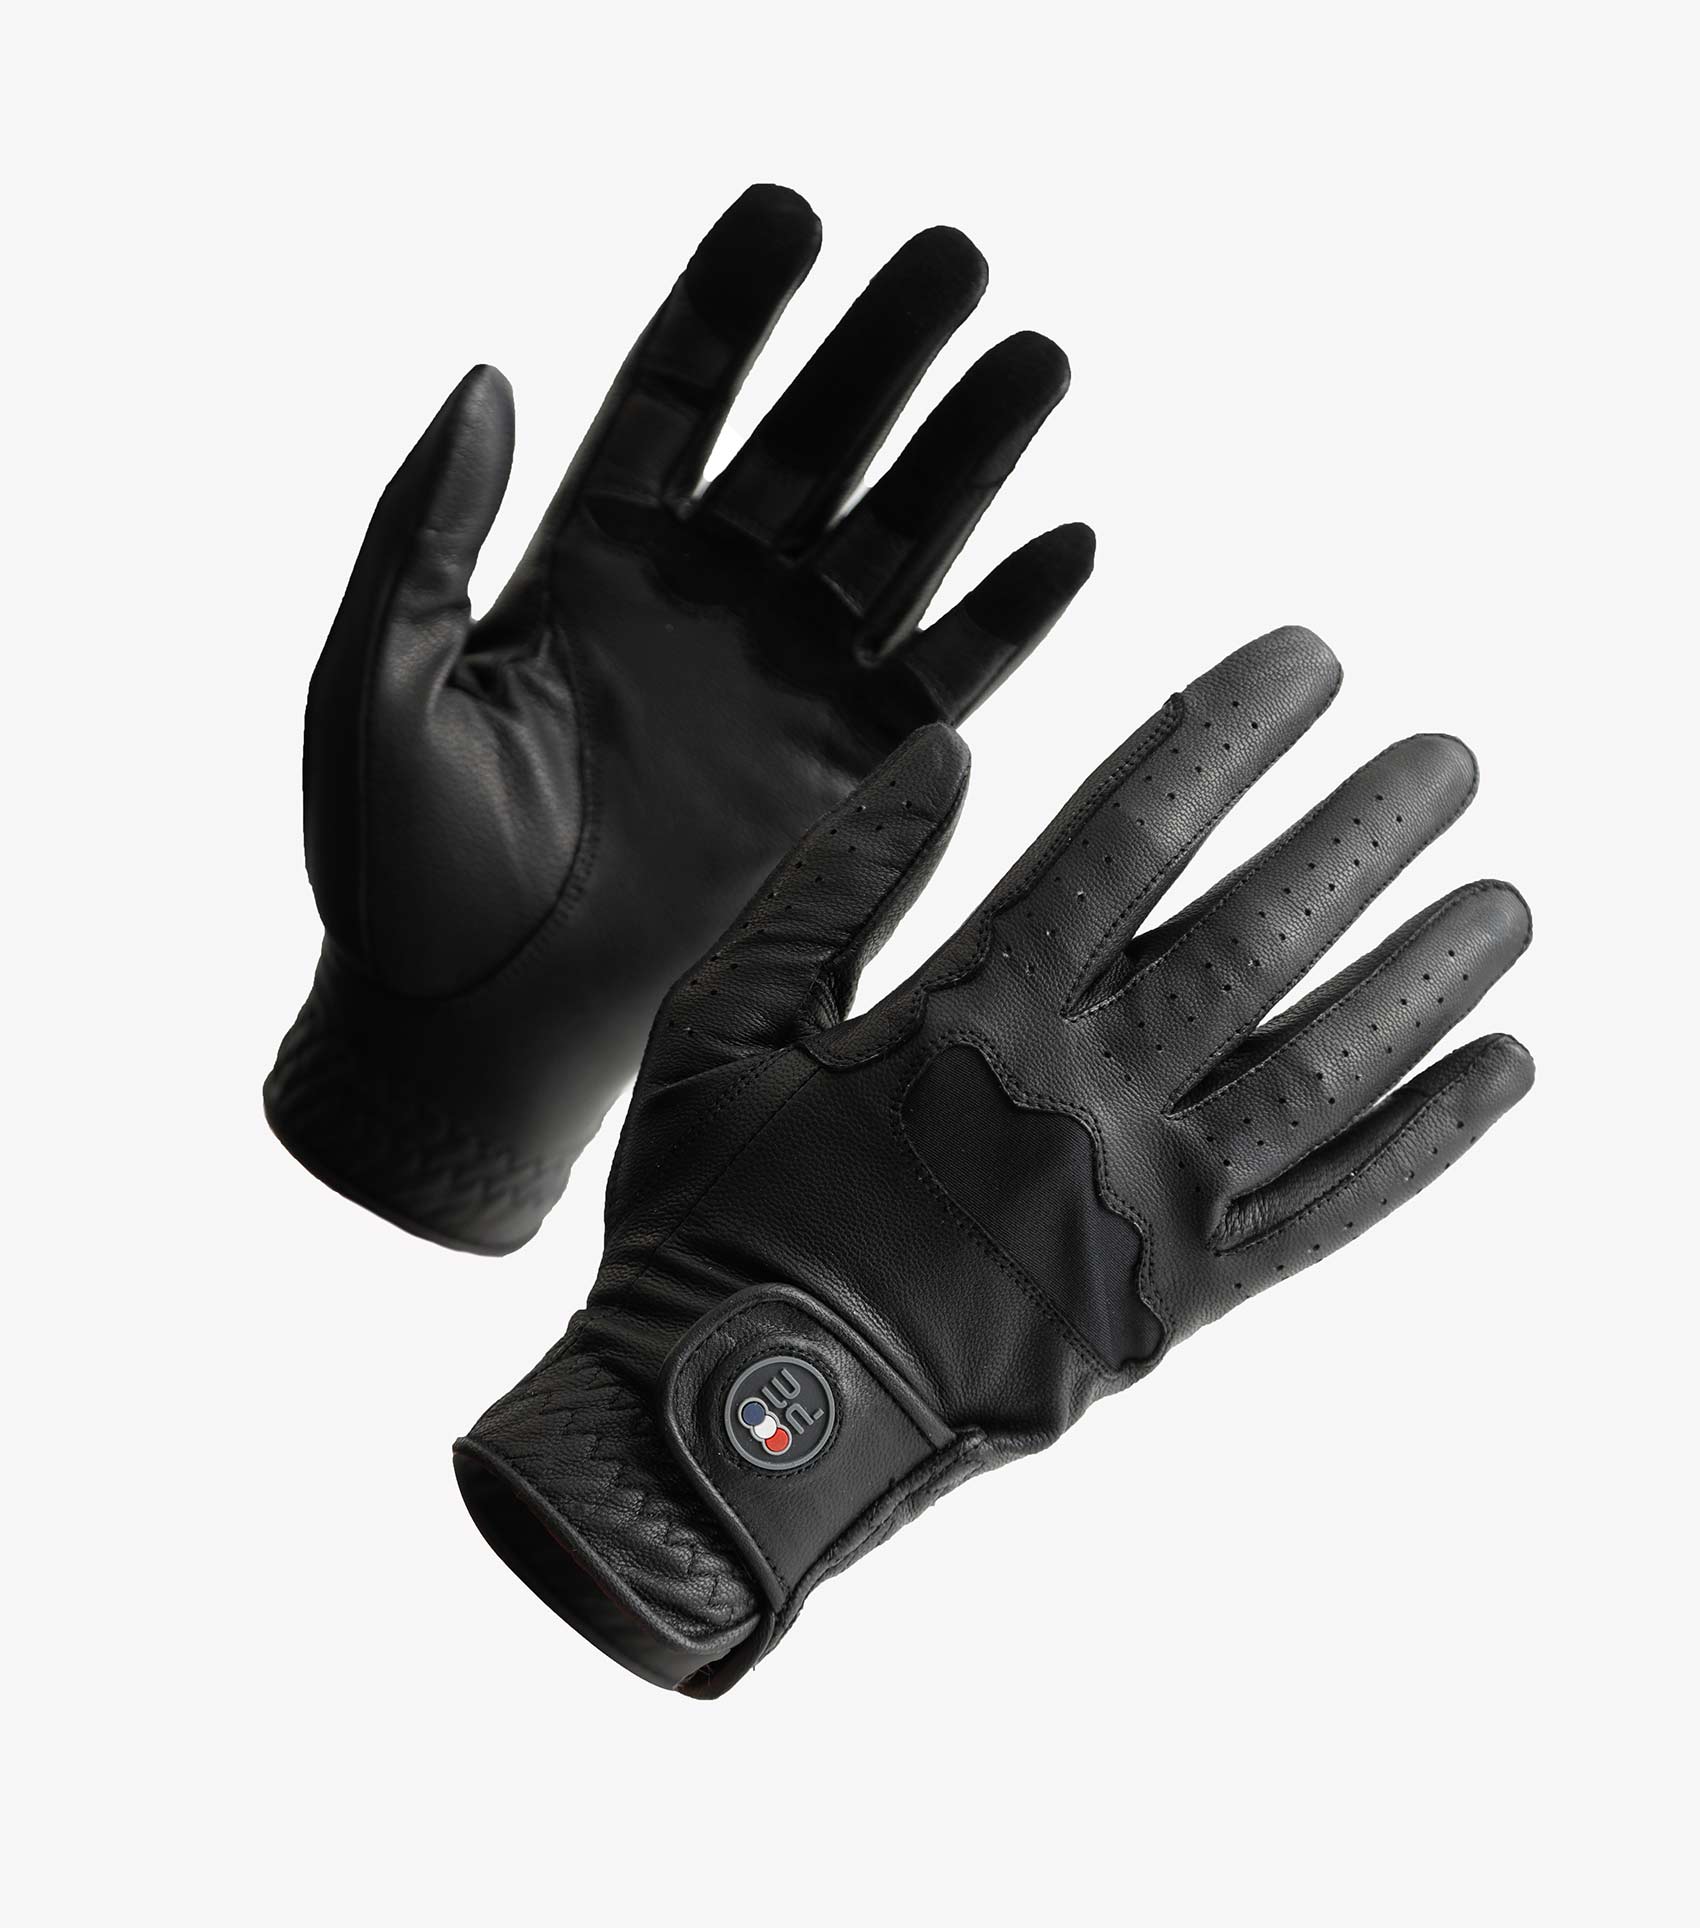 PE - Mizar Ladies Leather Riding Gloves